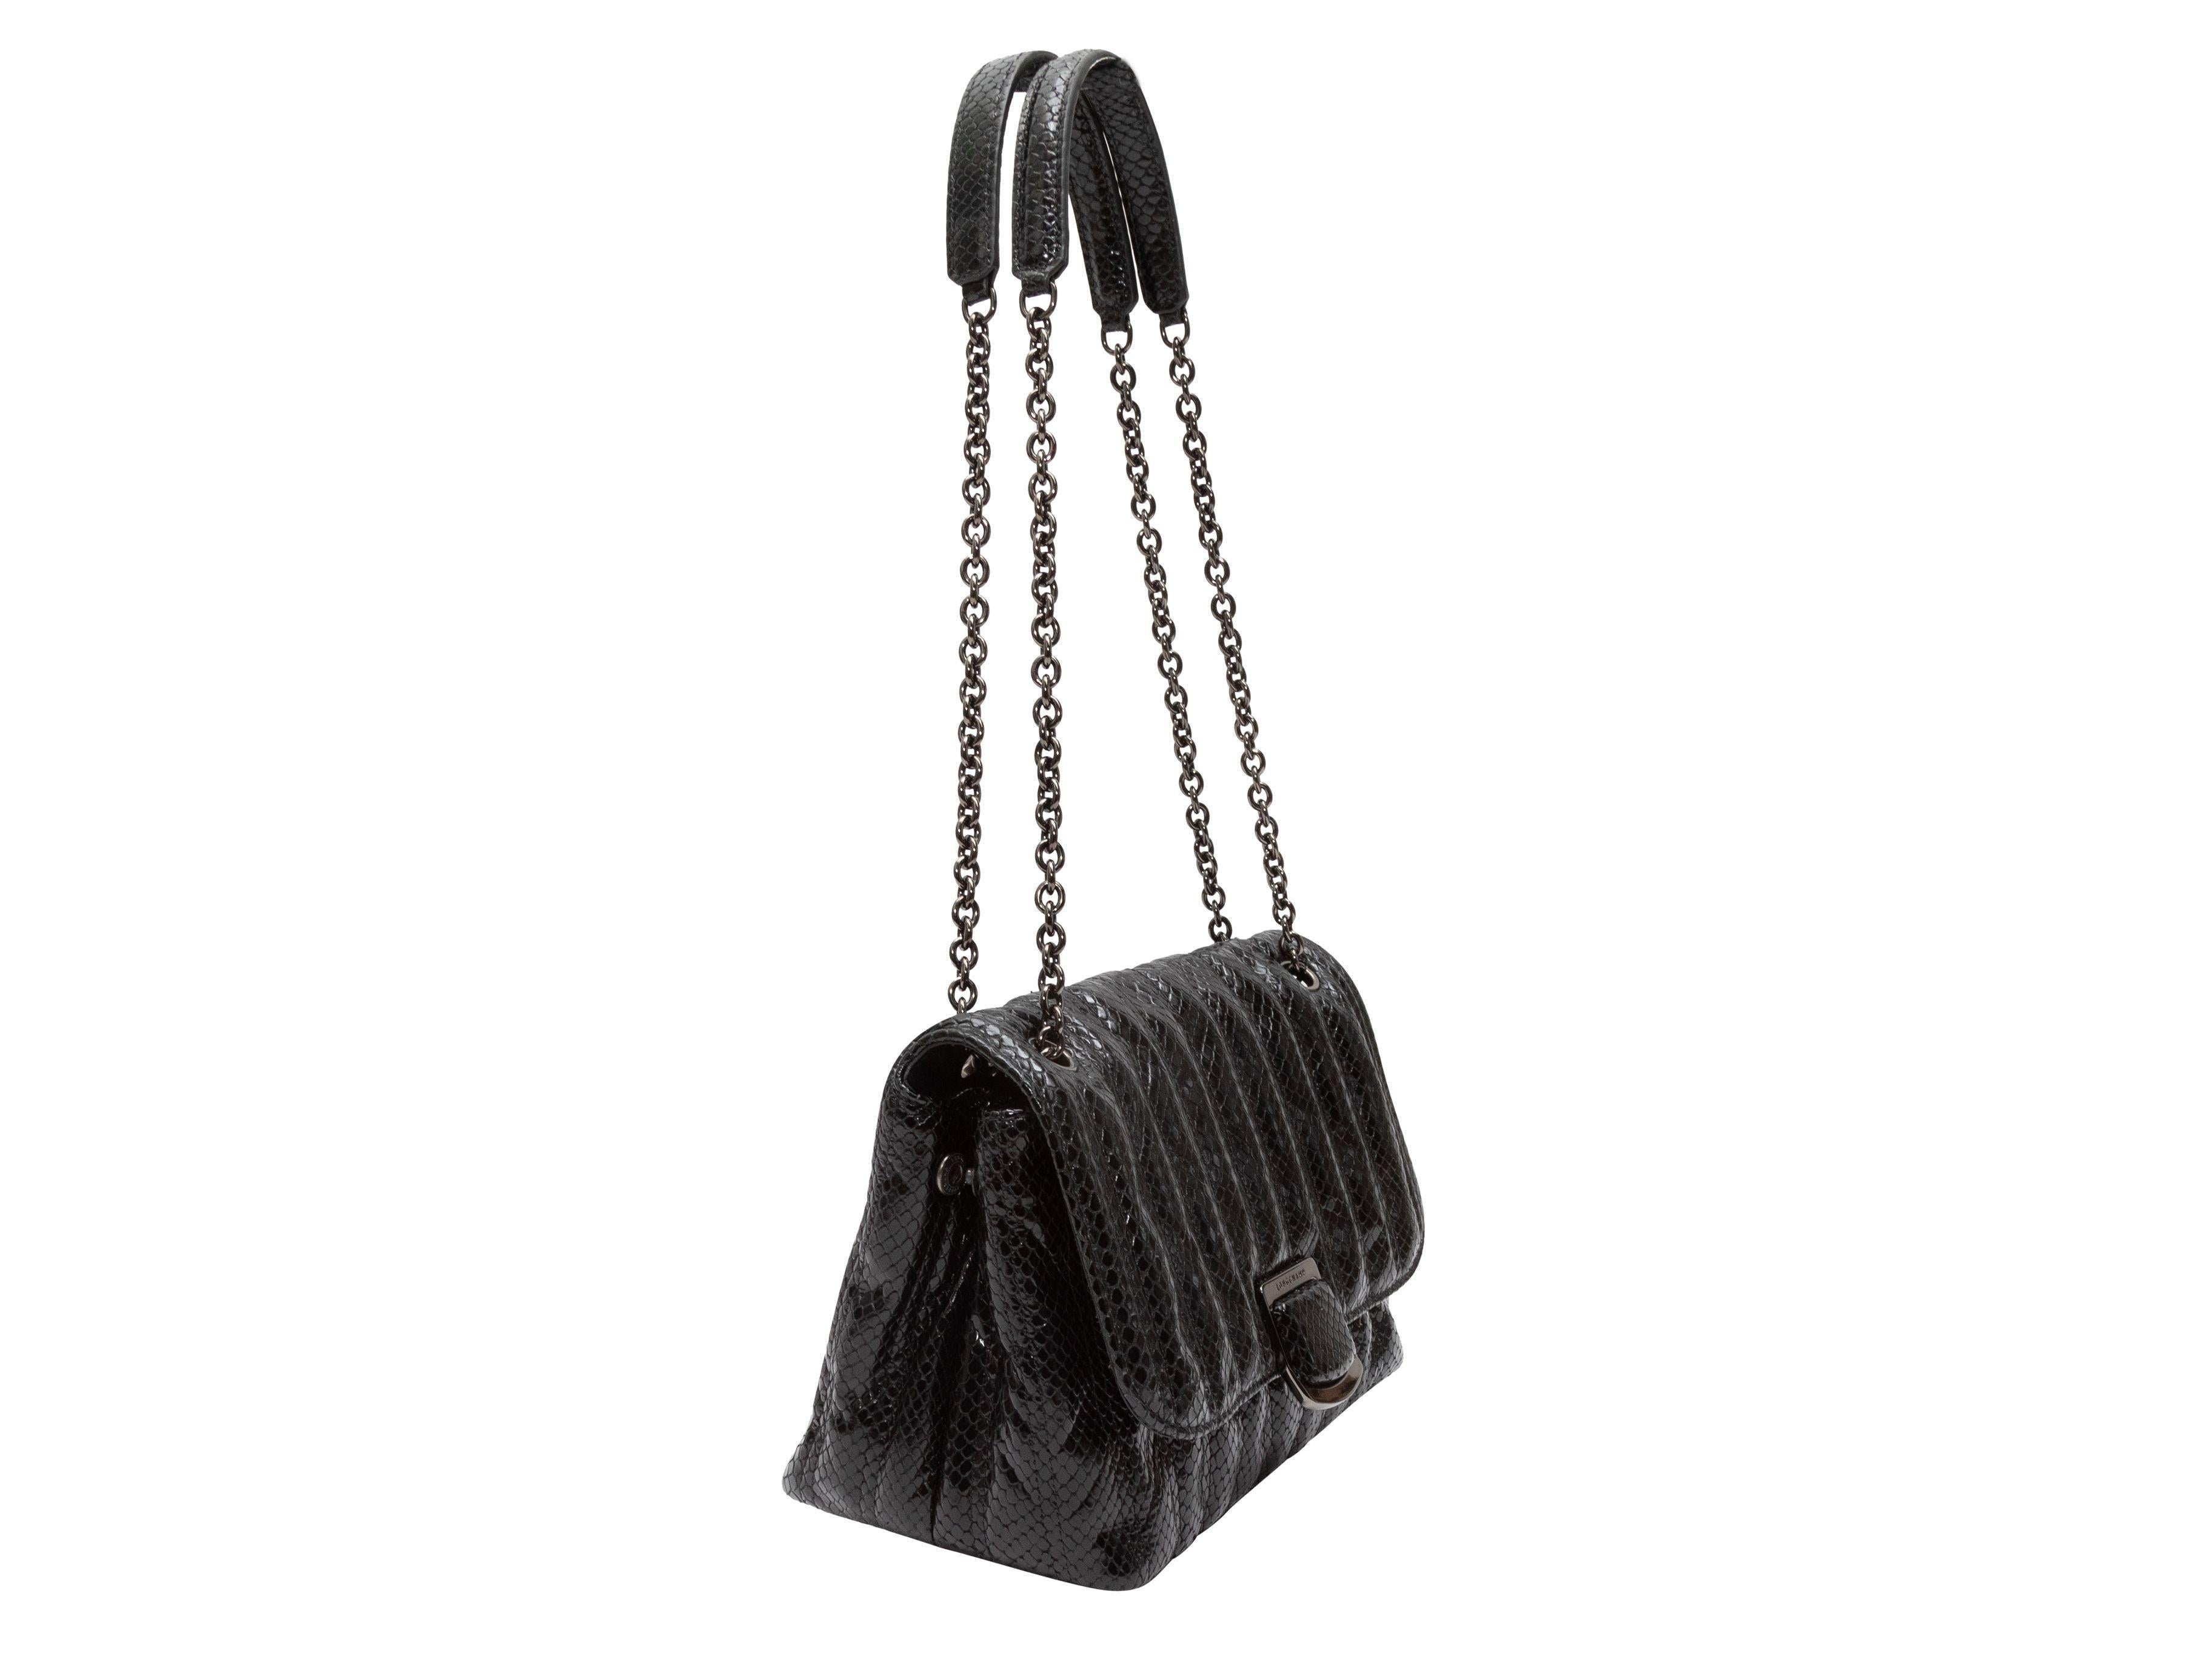 Longchamp Black Embossed Leather Handbag 2